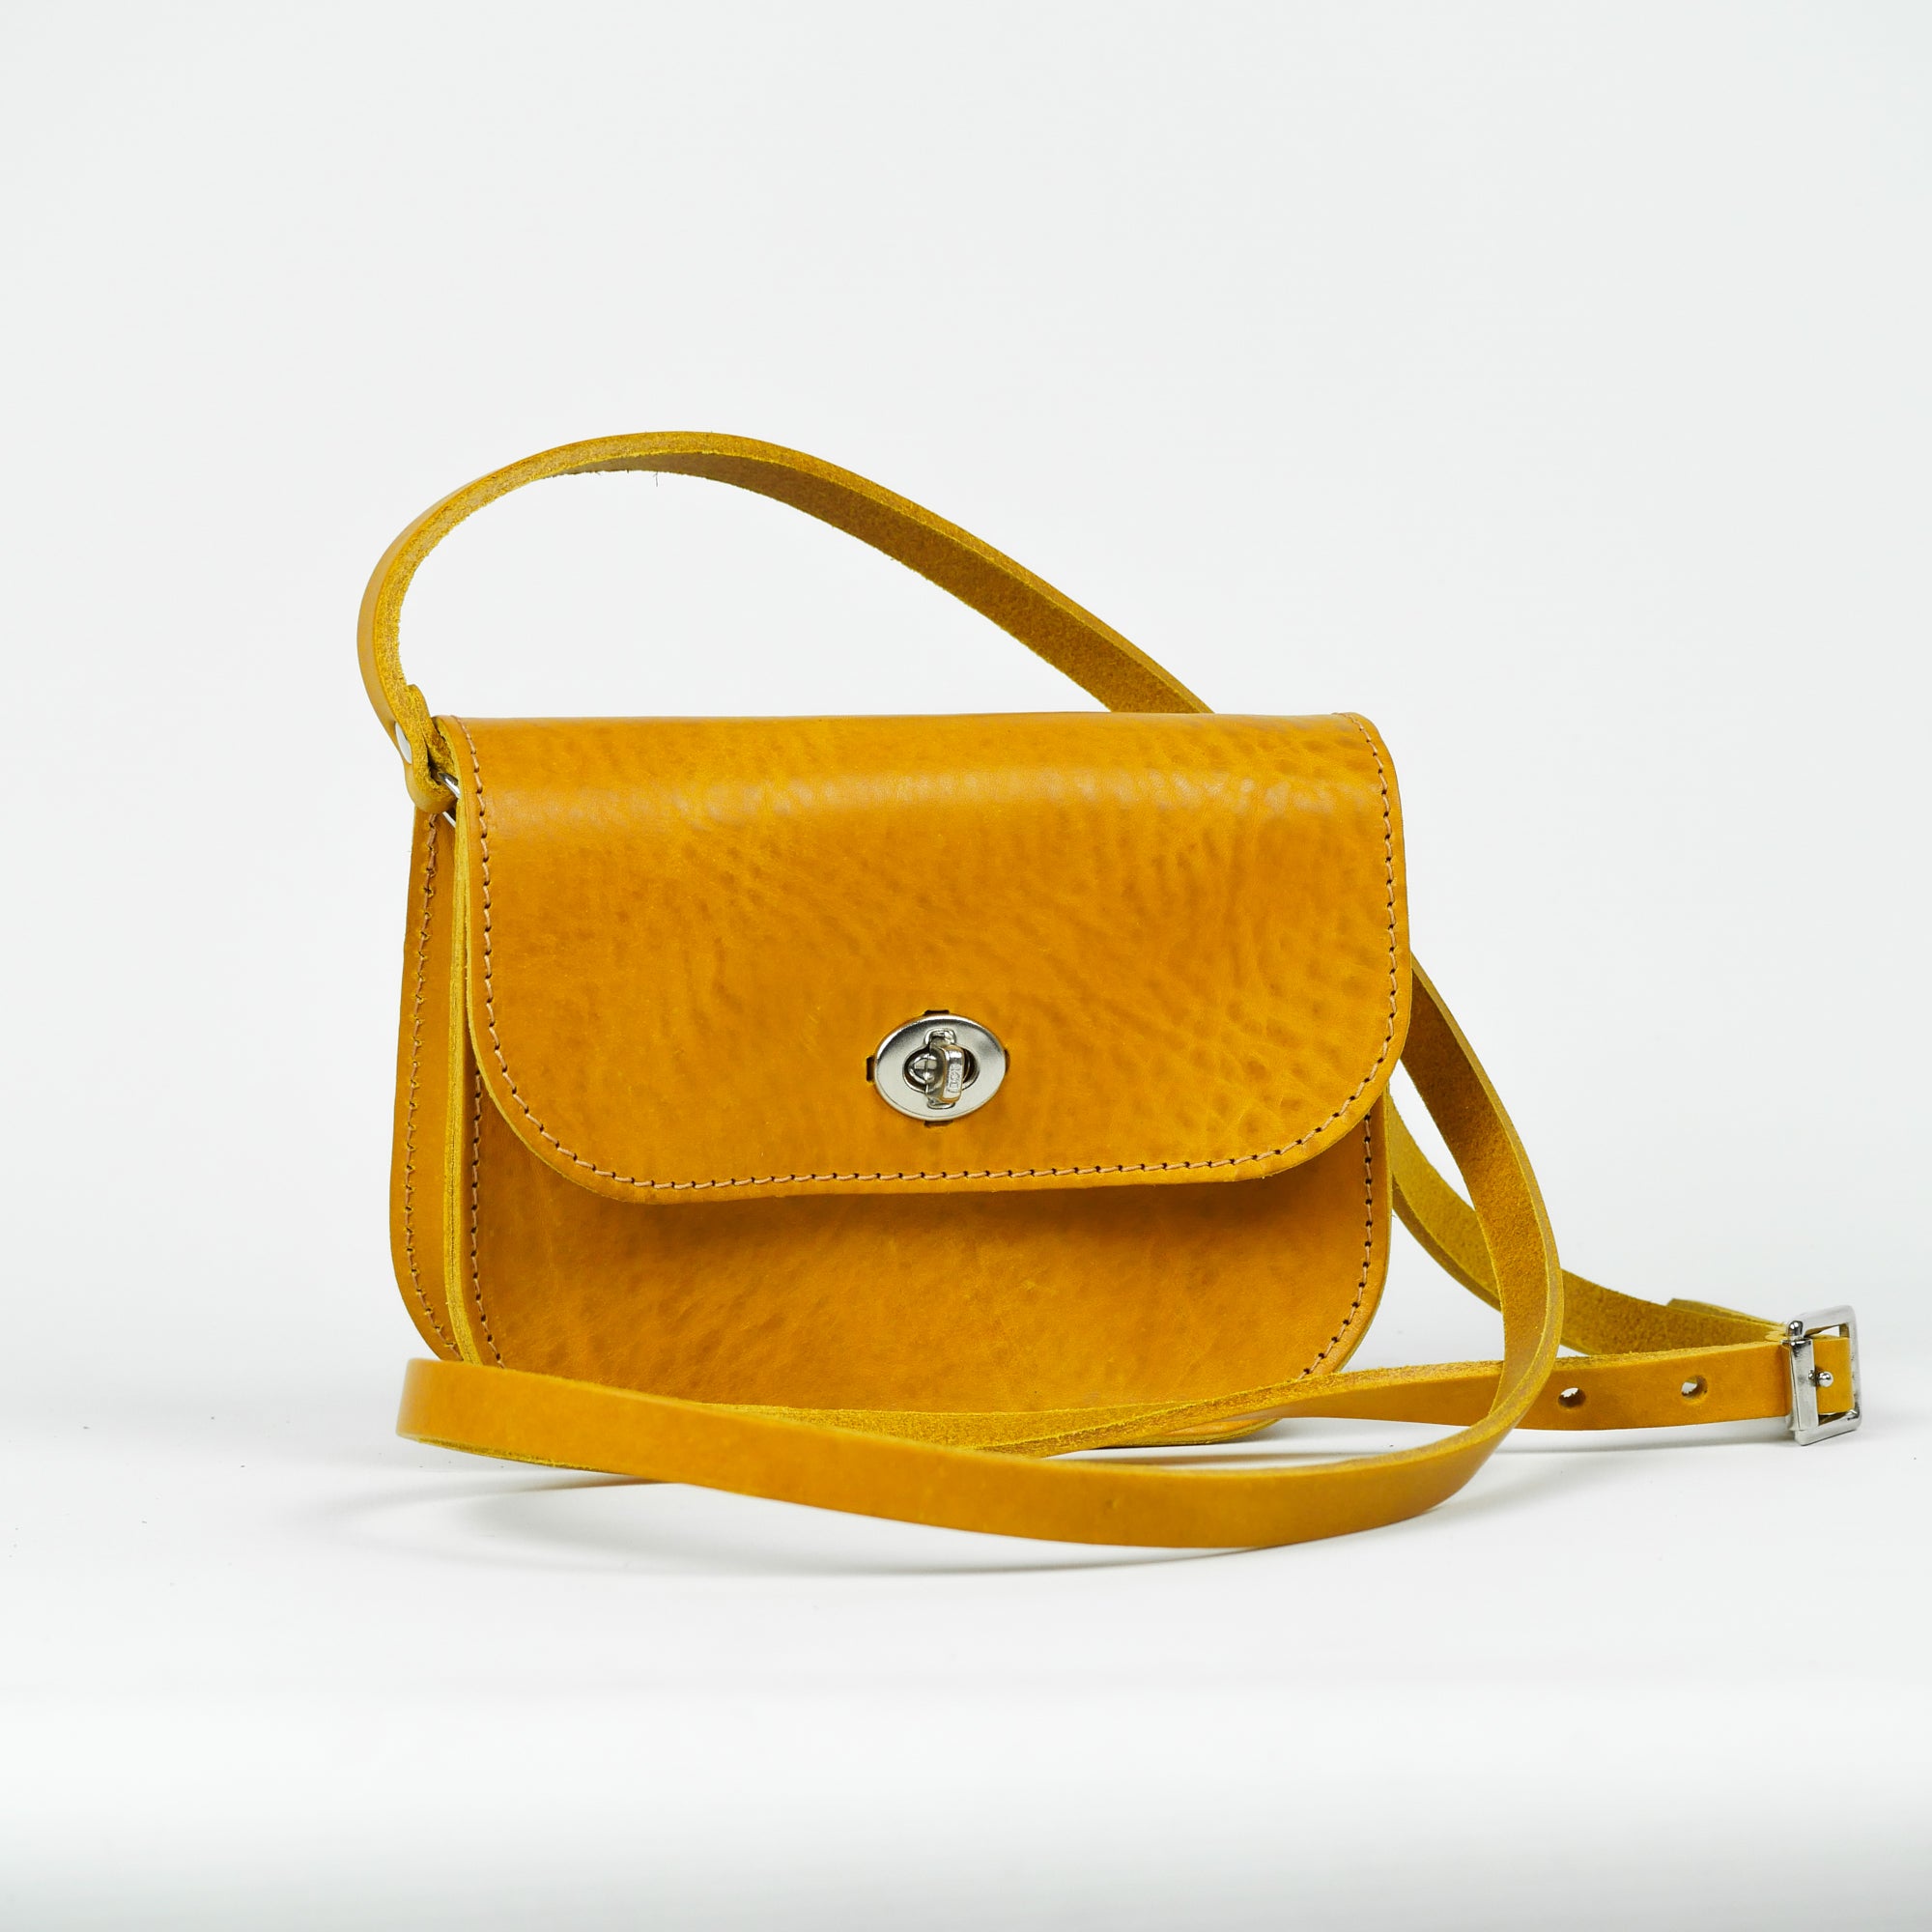 Missouri Mustard Yellow Leather Shoulder Bag